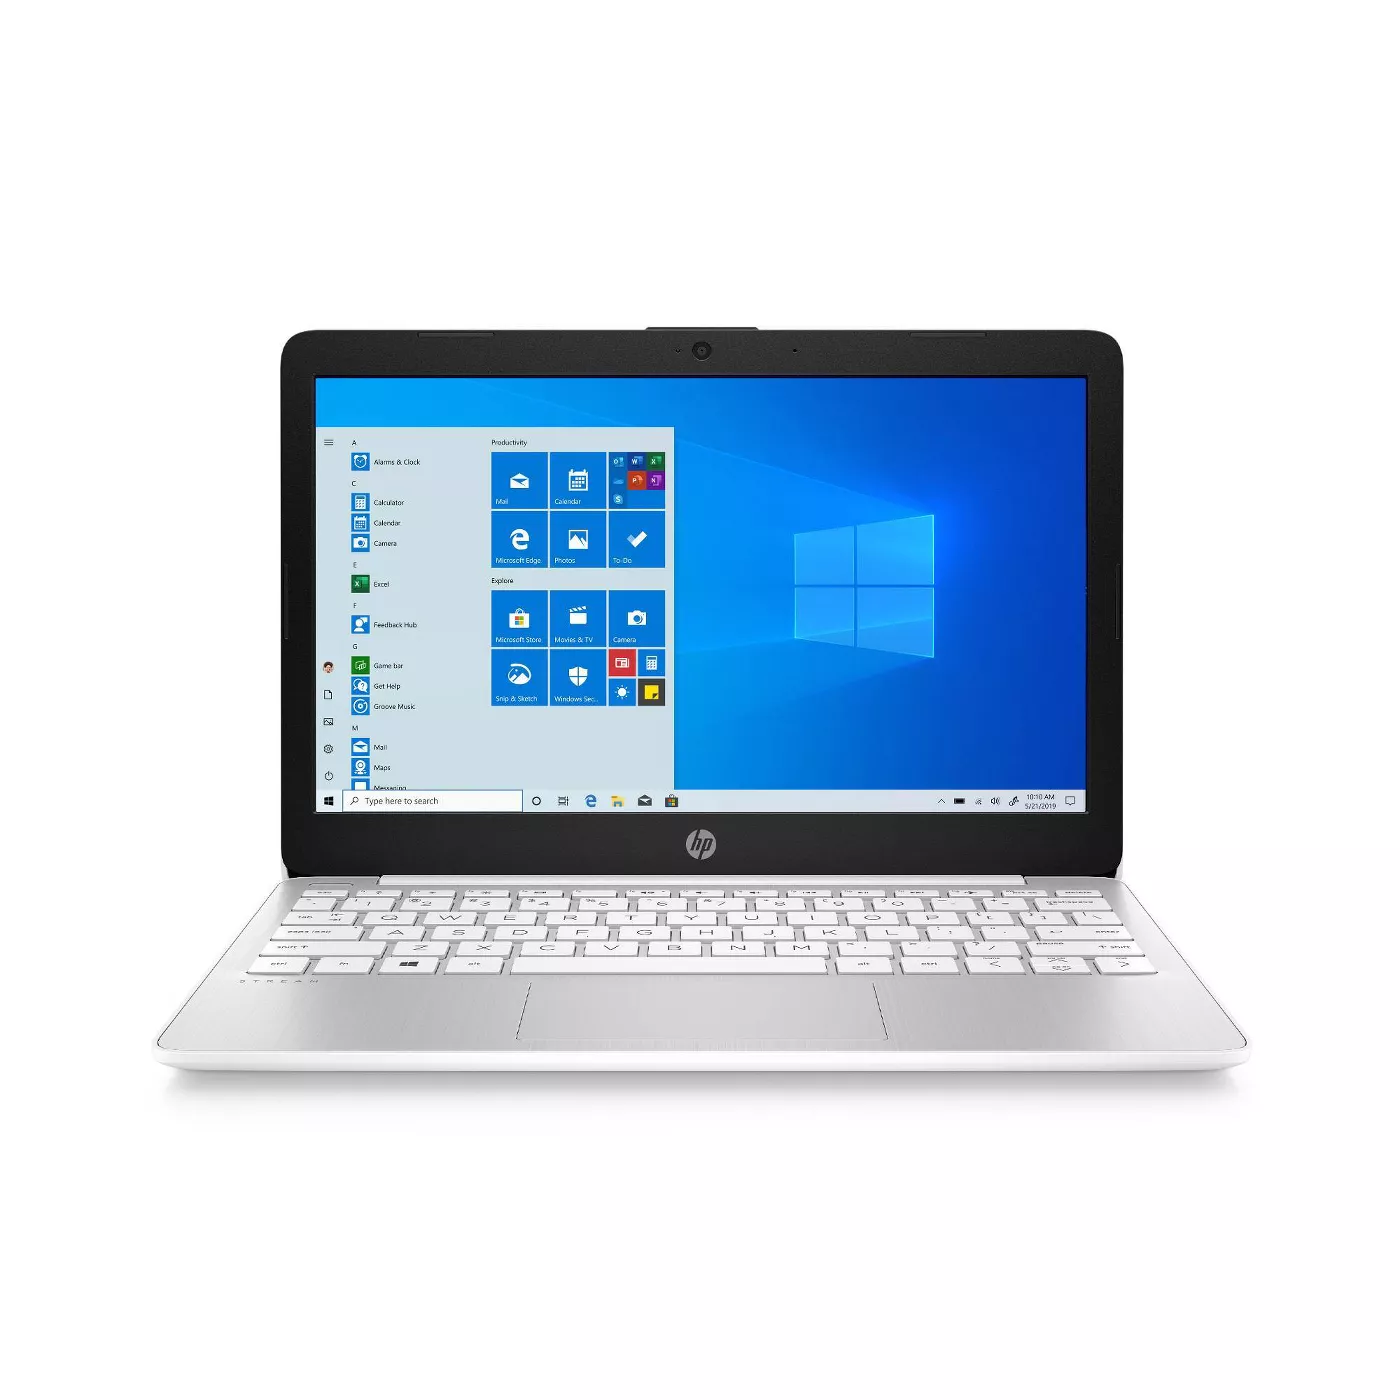 HP 11.6" Stream Laptop with Windows 10 Home in S mode - Intel Processor - 4GB RAM Memory - 32GB Flash Storage - White (11-ak0035nr) - image 1 of 9